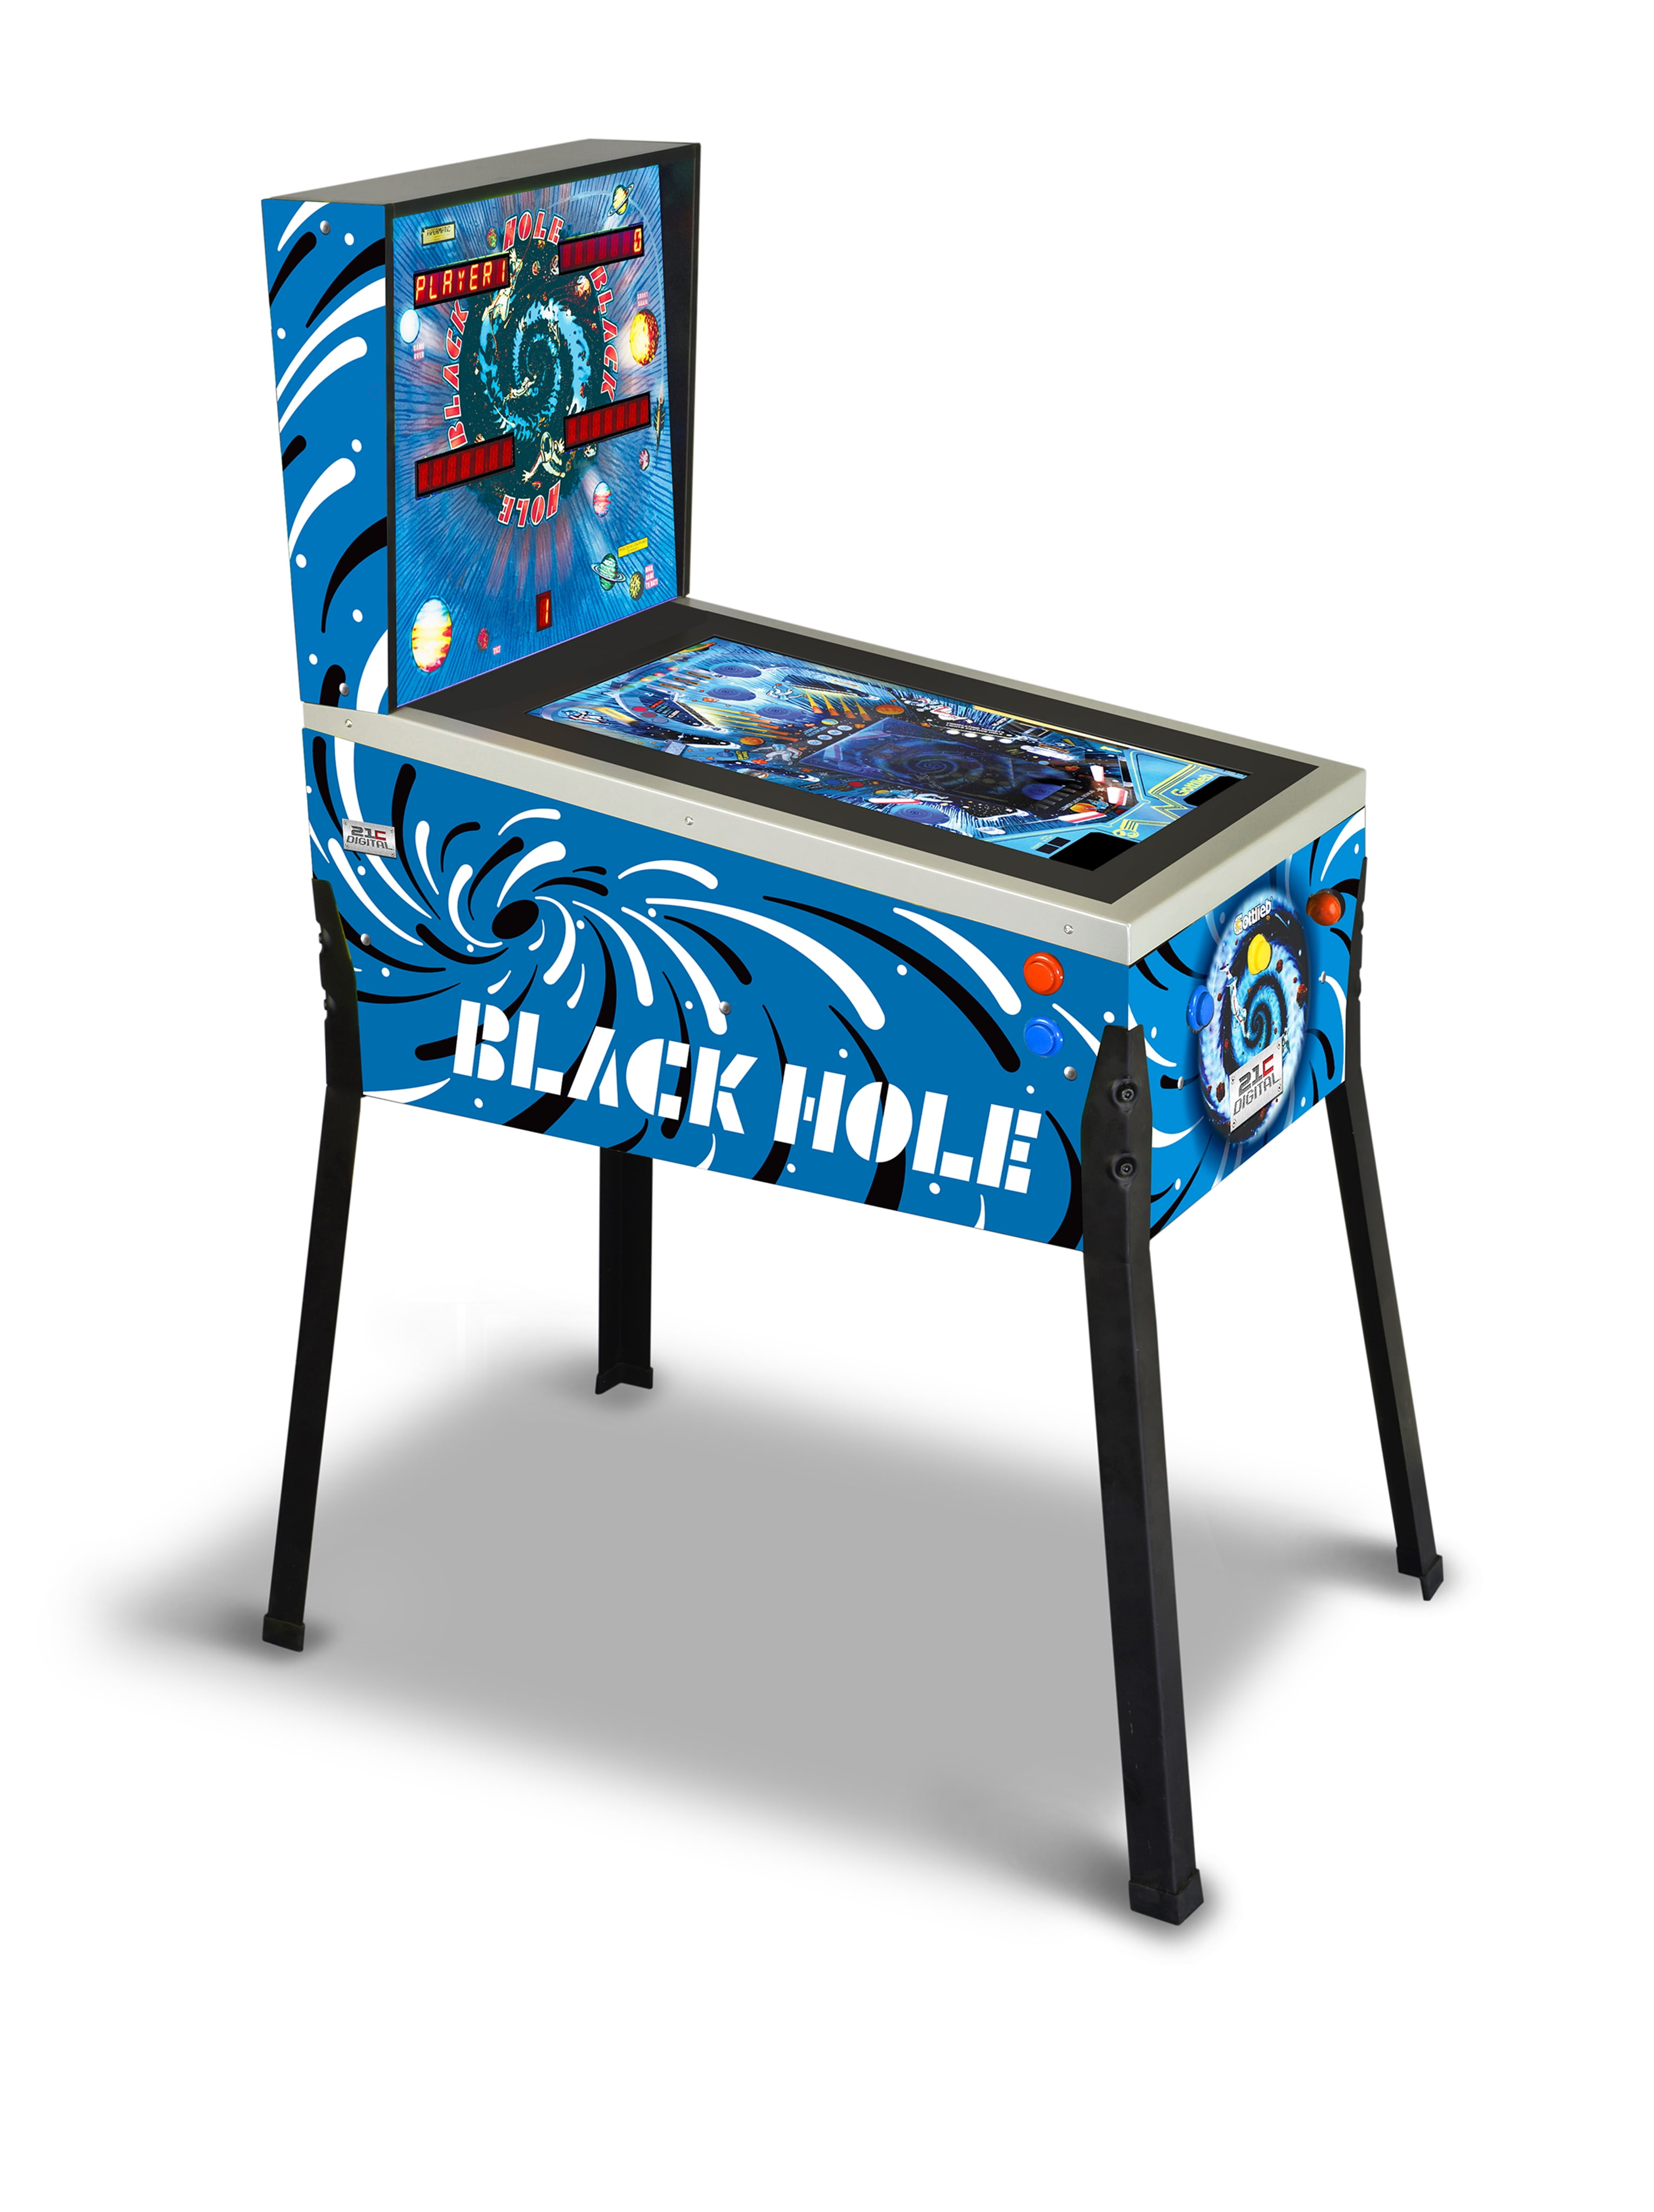 3/4 Scale Electronic Digital Pinball Machine Black Hole, Toy Shock